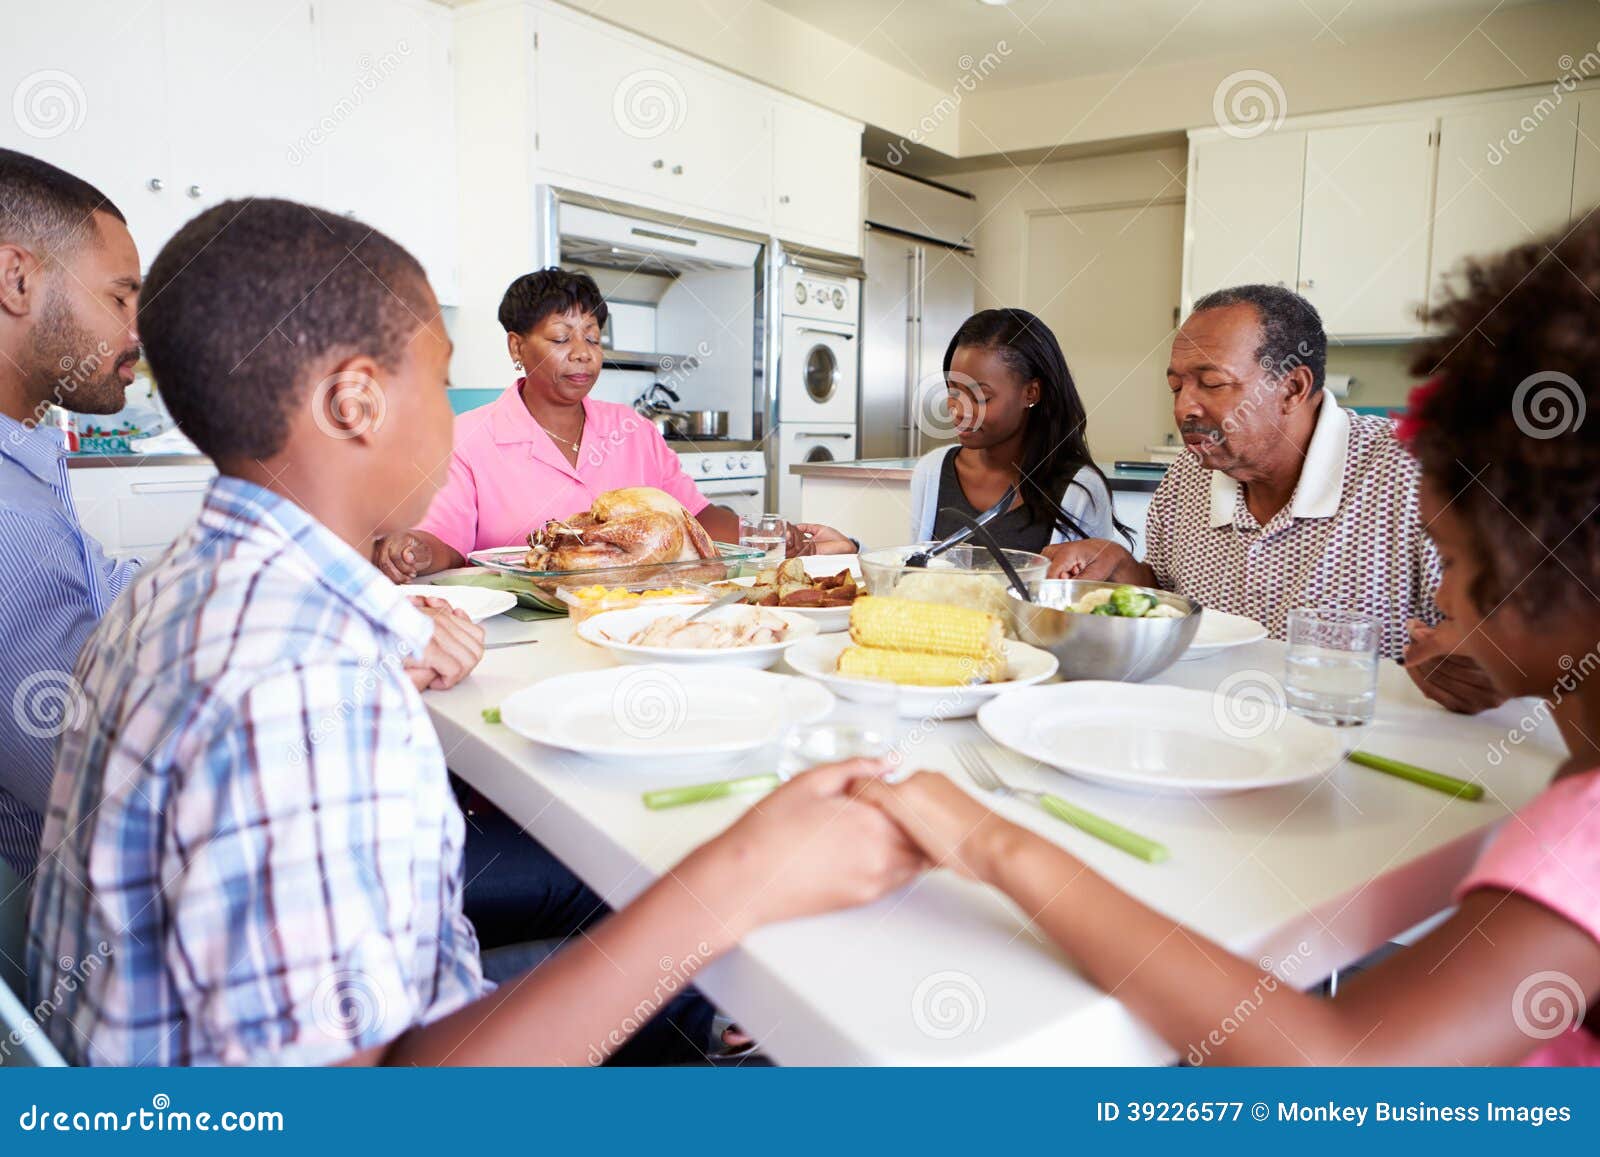 multi-generation family saying prayer before eating meal